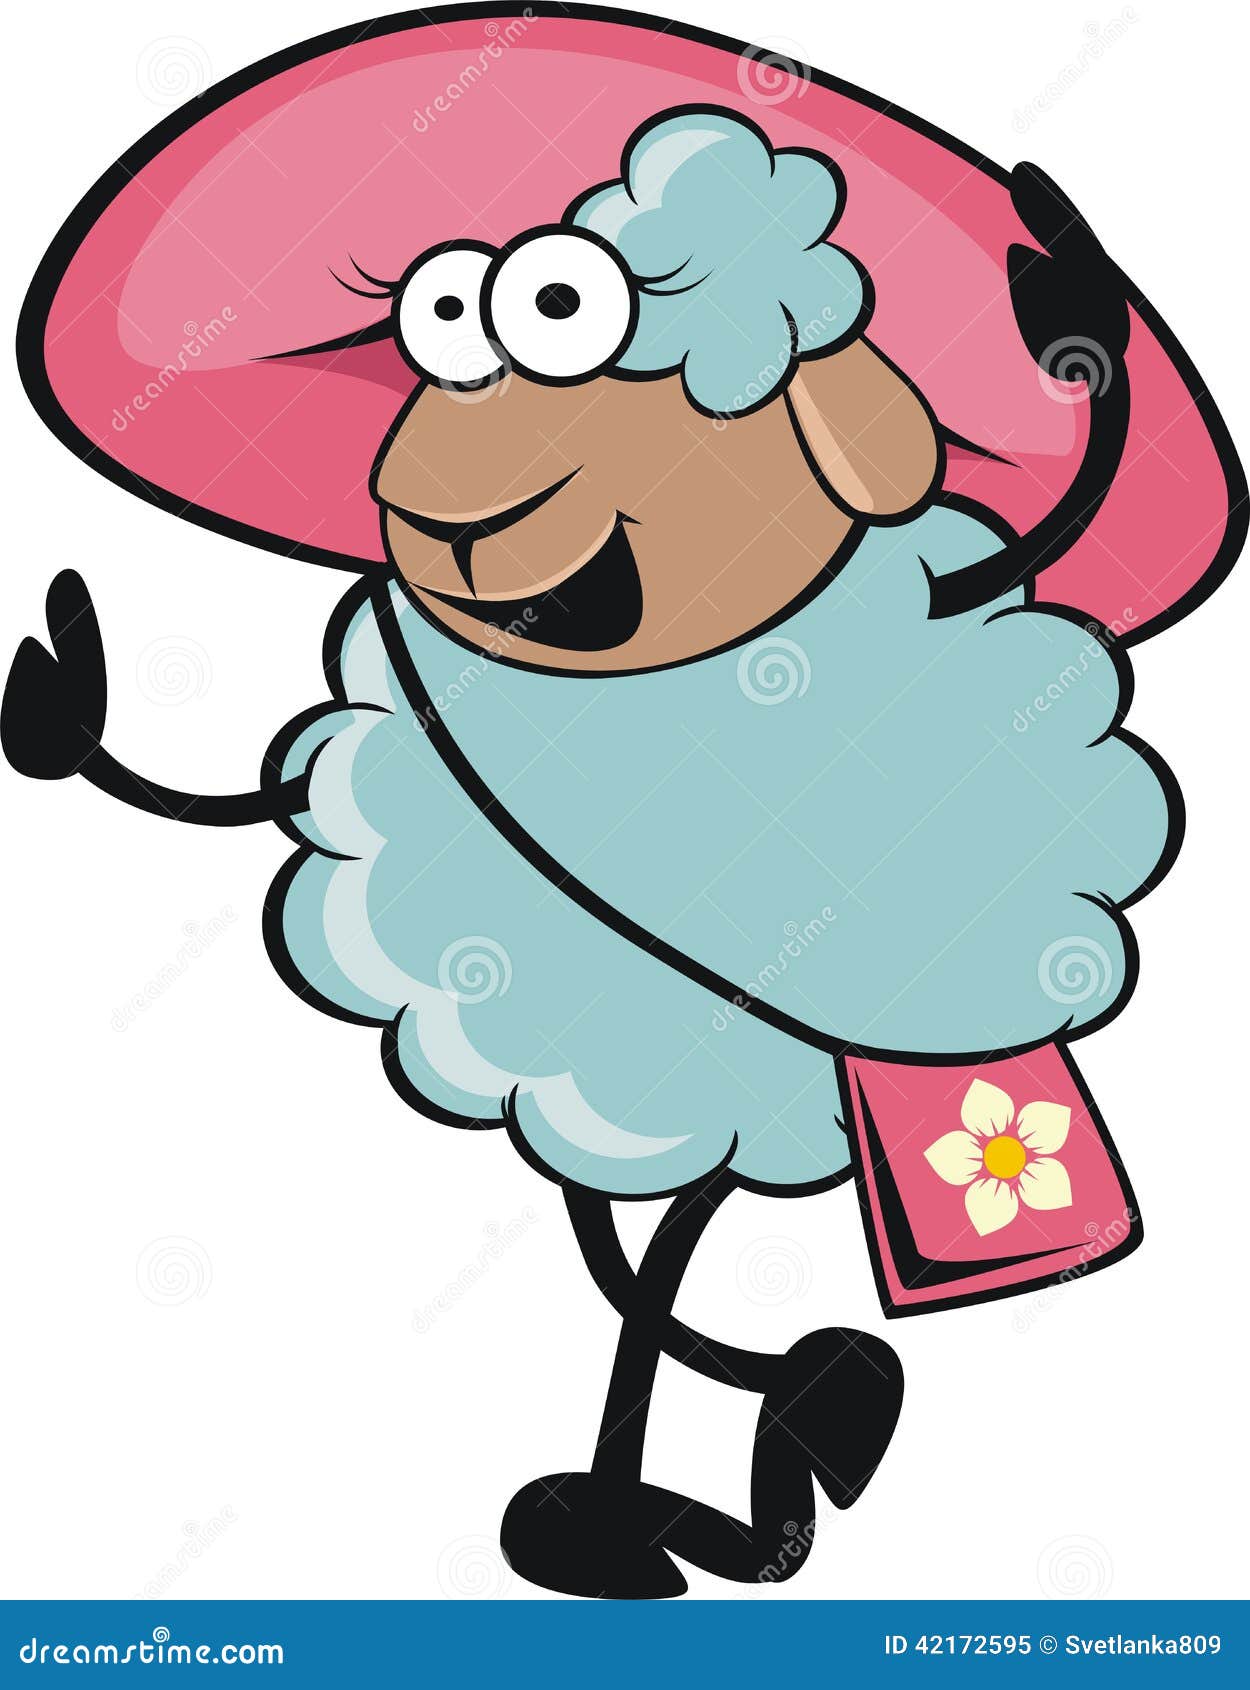 Funny Cartoon Sheep Stock Vector - Image: 42172595